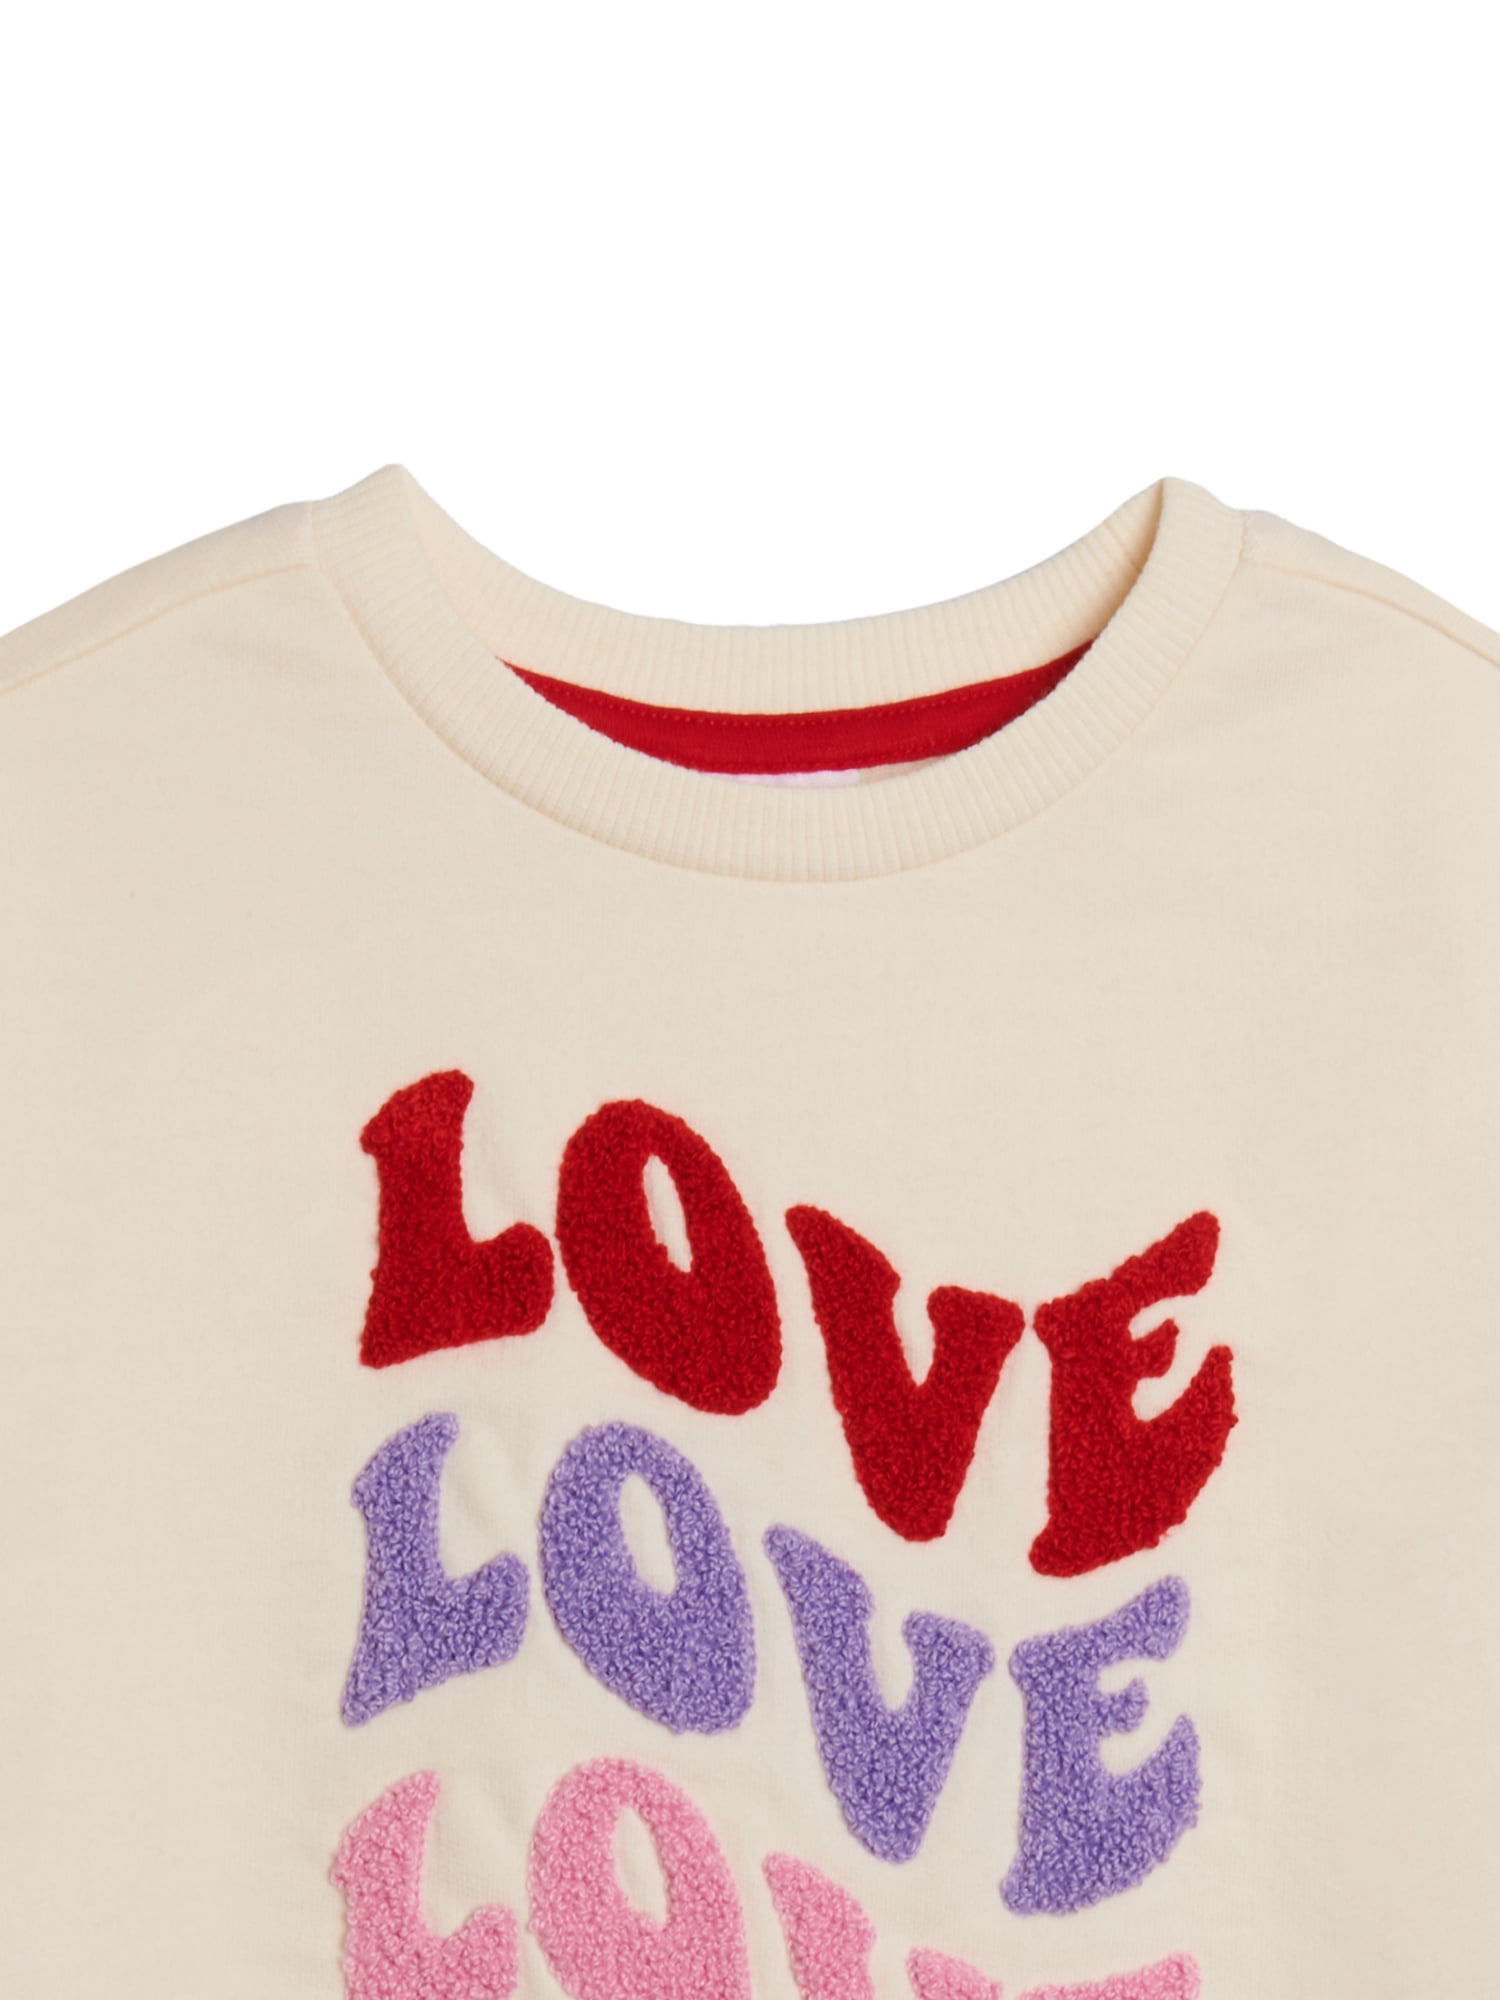 Nation Sweatshirt Sizes Sleeves, Wonder Girls Crewneck Day Long Valentines Toddler with 2T-5T